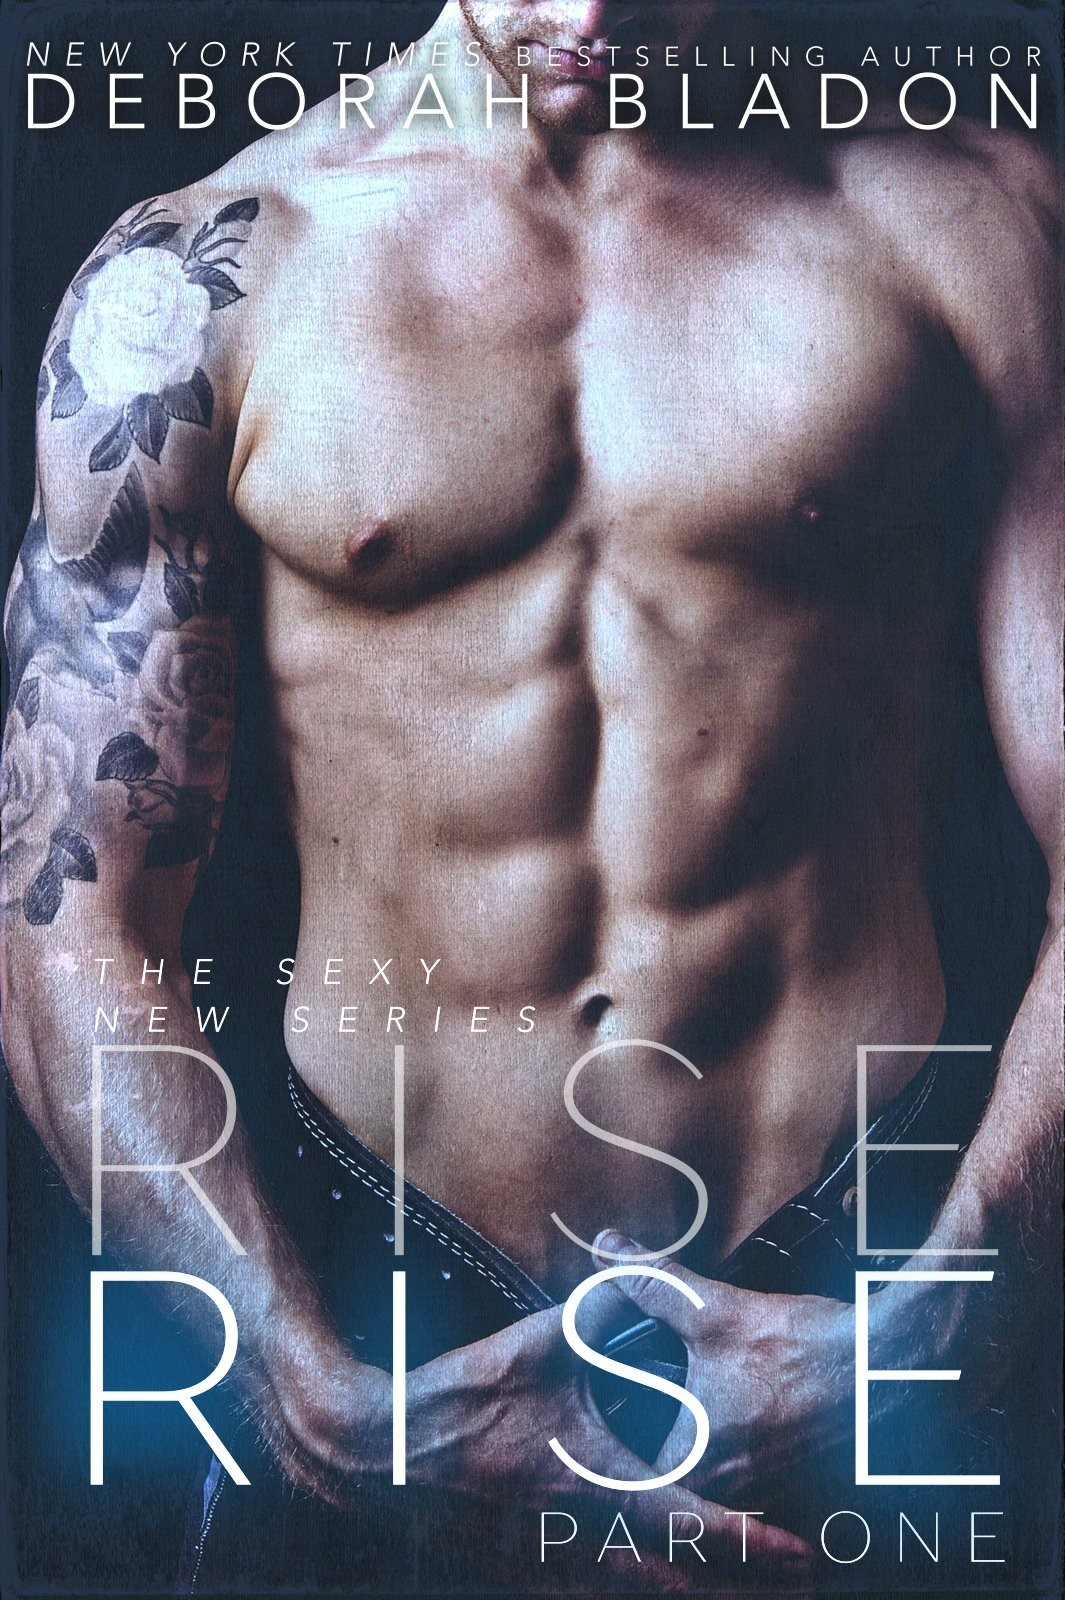 RISE - Part One (The RISE Series Book 1) by Deborah Bladon